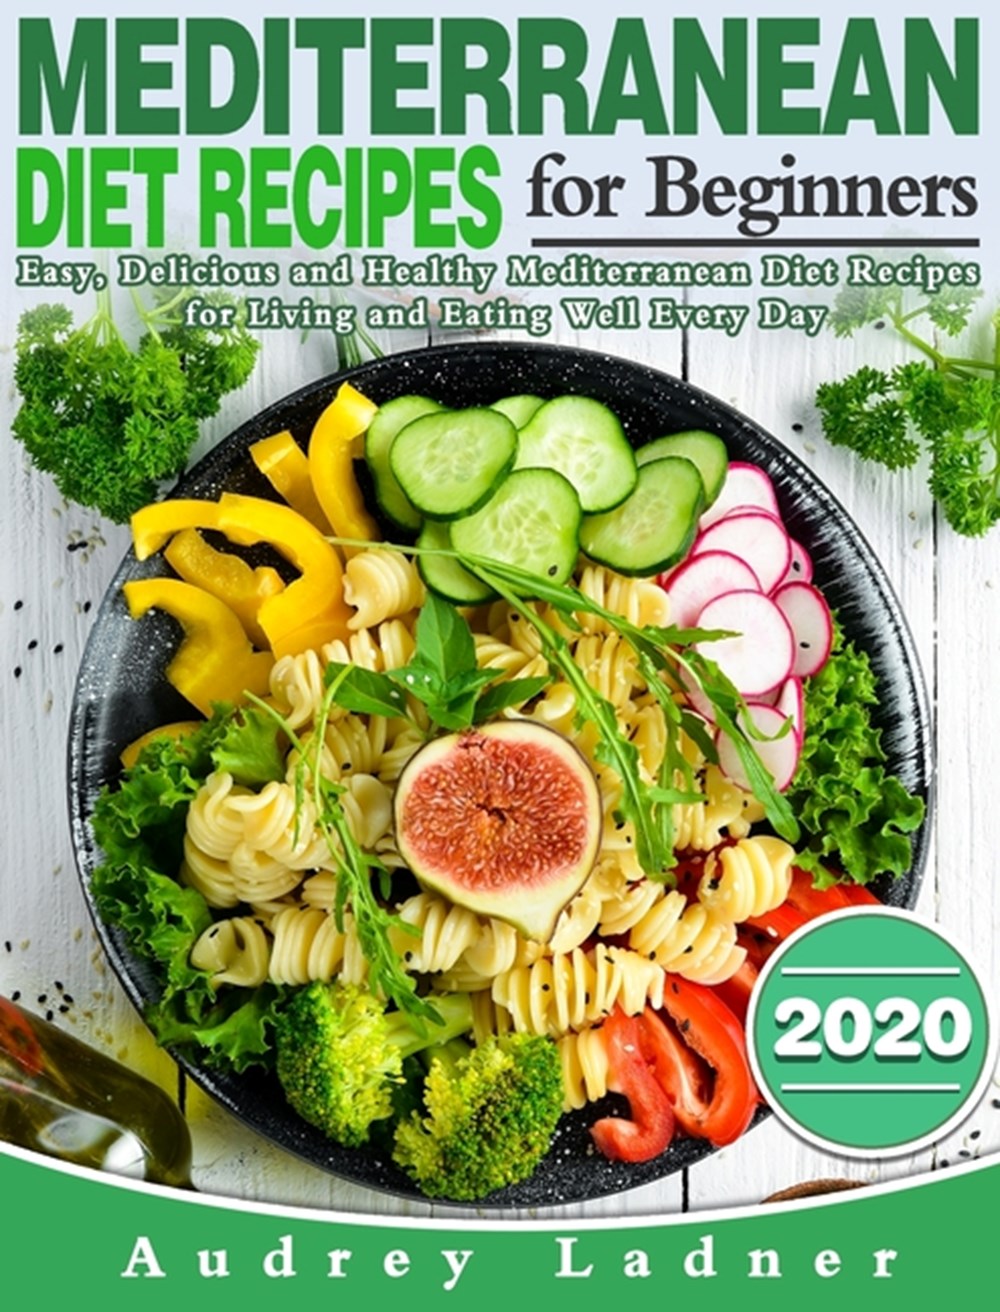 Mediterranean Diet Recipes for Beginners 2020: Easy, Delicious and Healthy Mediterranean Diet Recipe